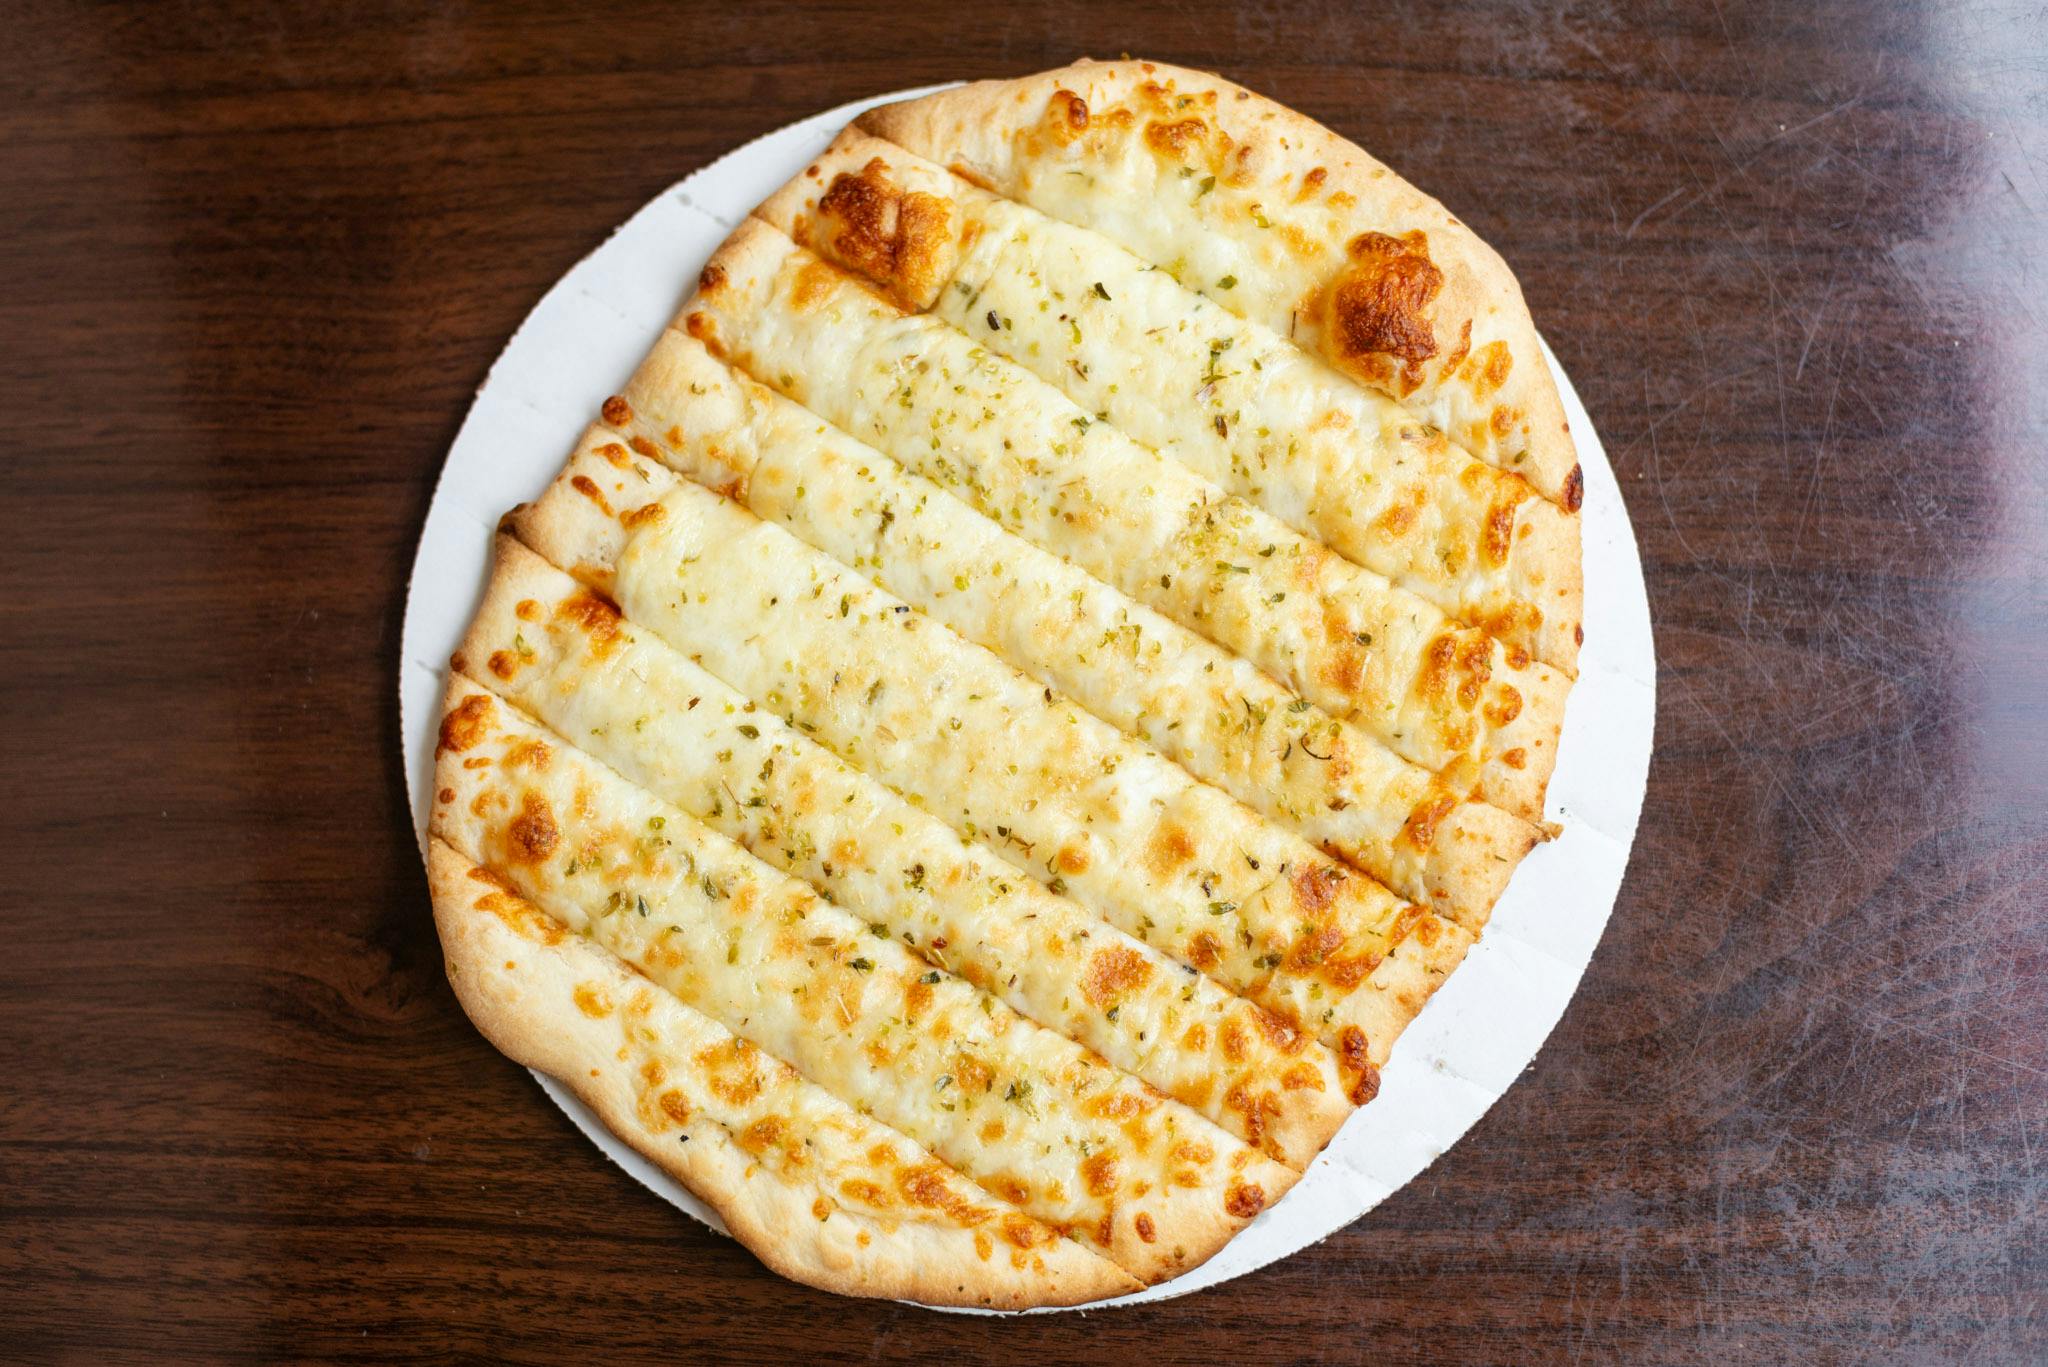 Cheesy Breadstix from Pizza Bob's in Ann Arbor, MI